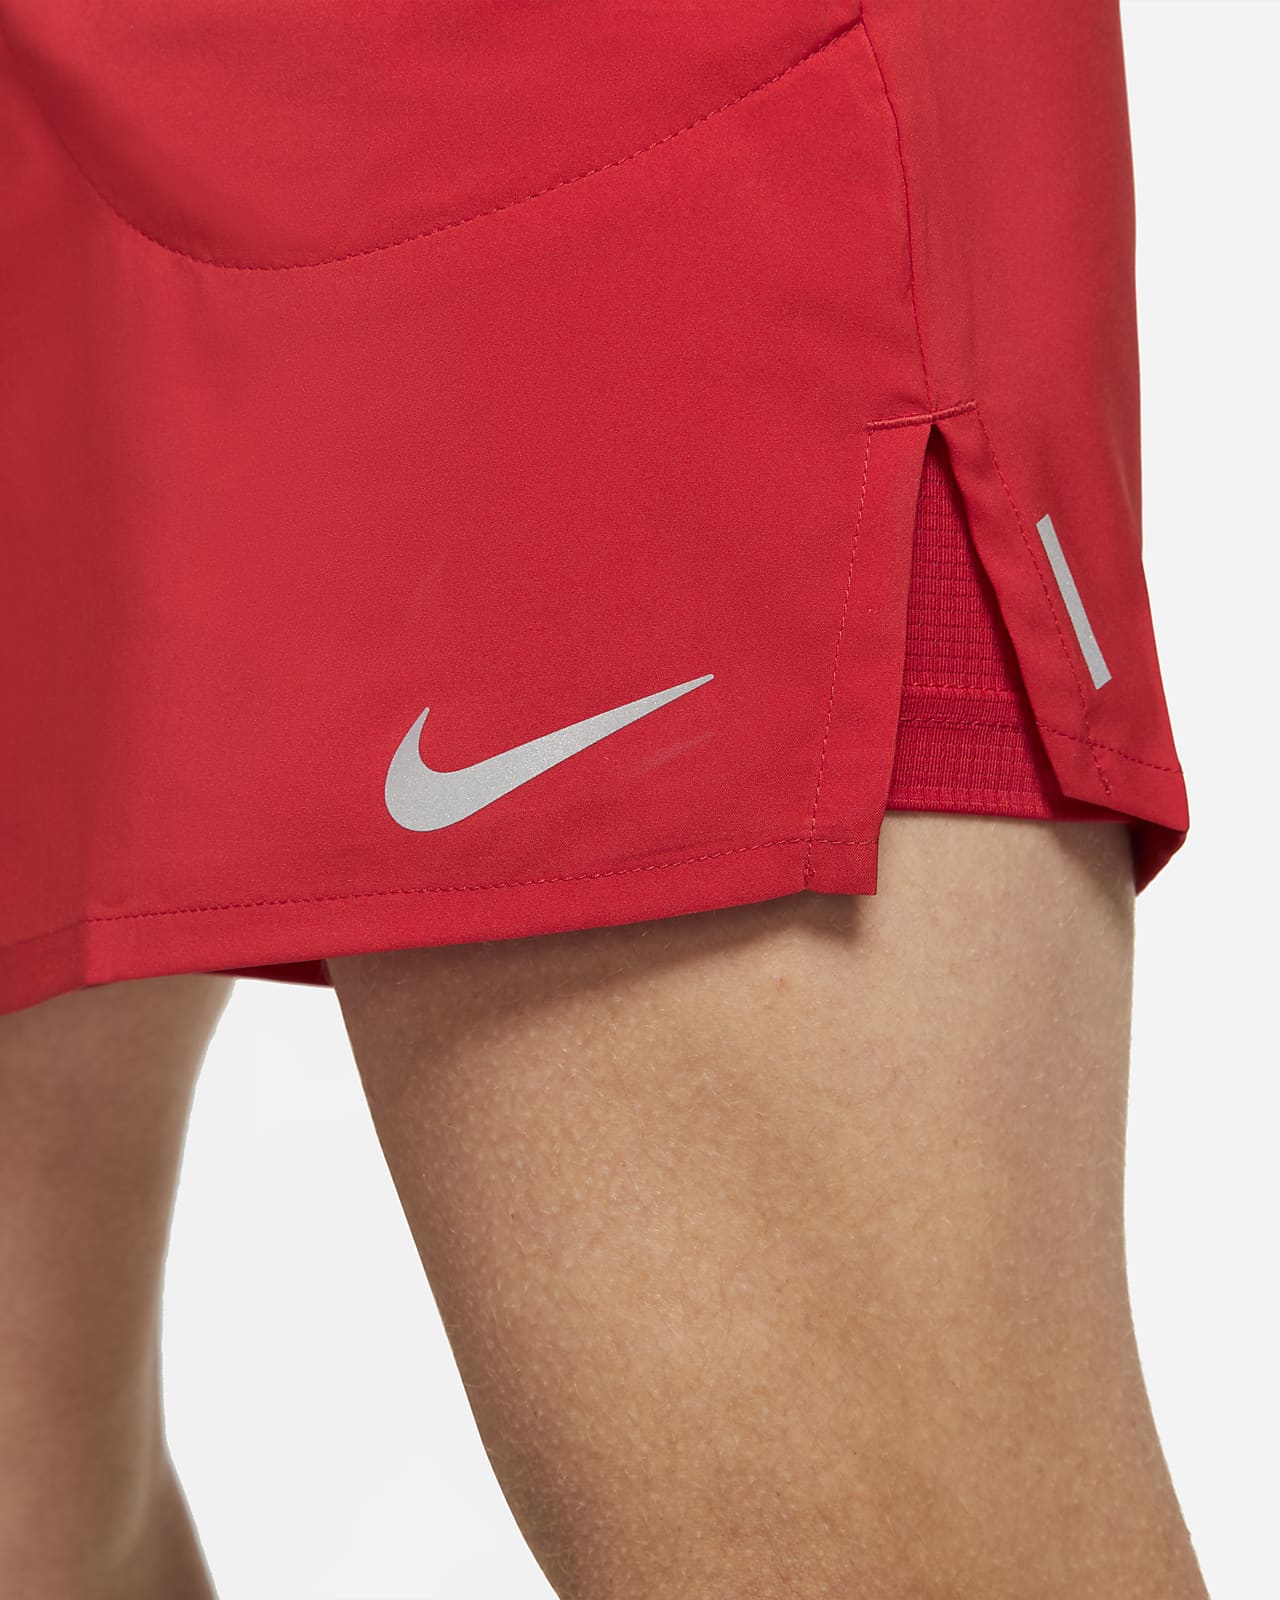 Nike Flex Stride Men's 2-In-1 Shorts. Nike.com